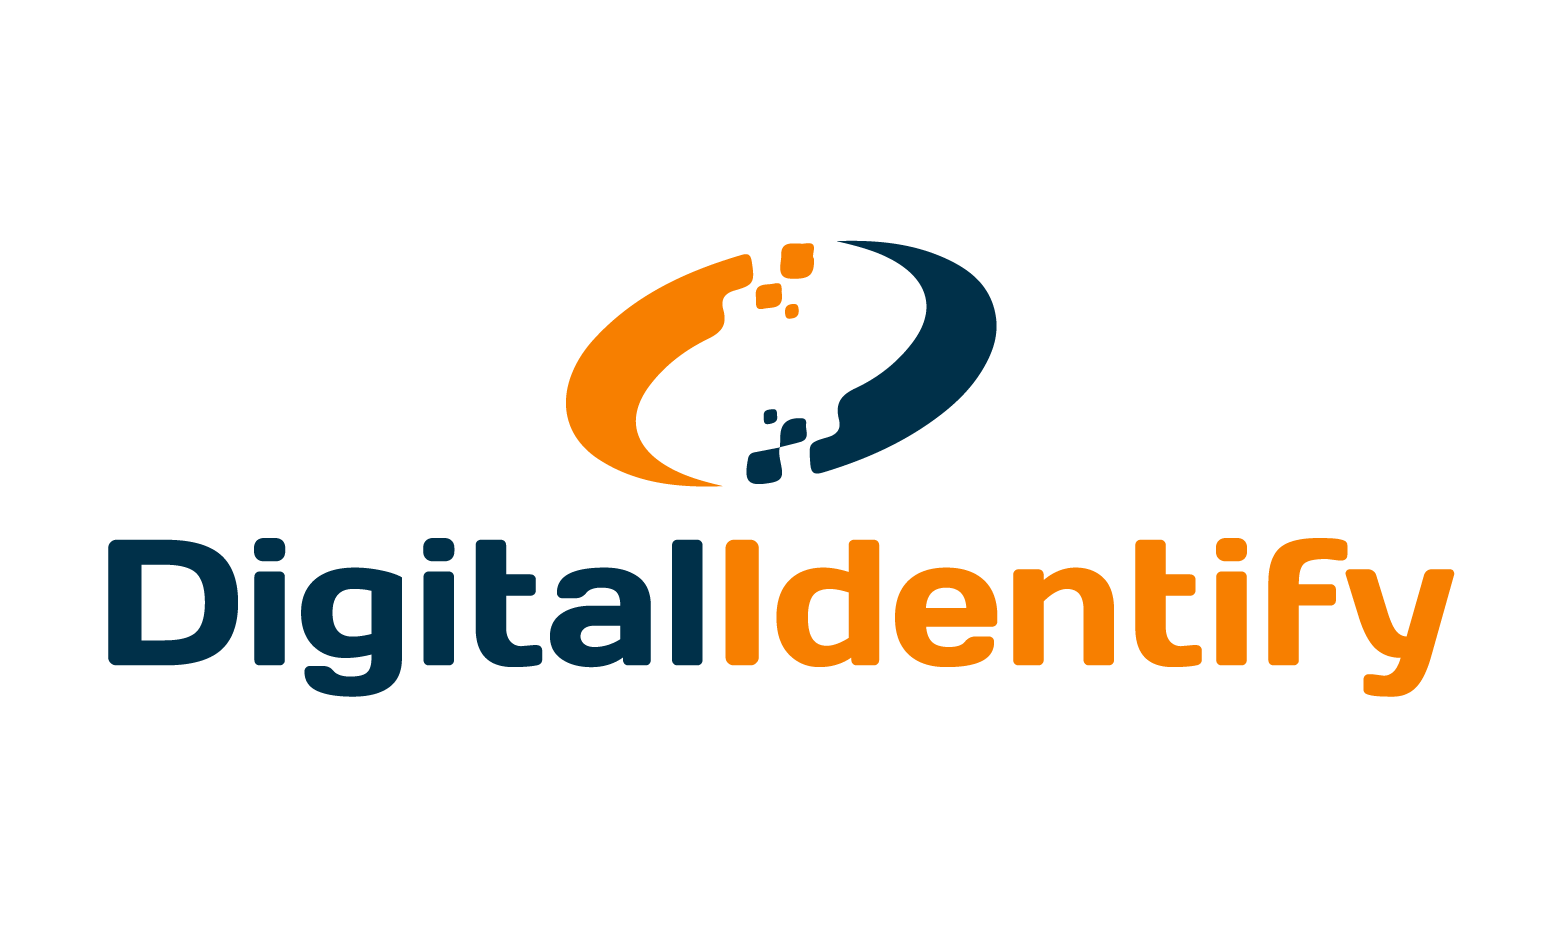 DigitalIdentify.com - Creative brandable domain for sale